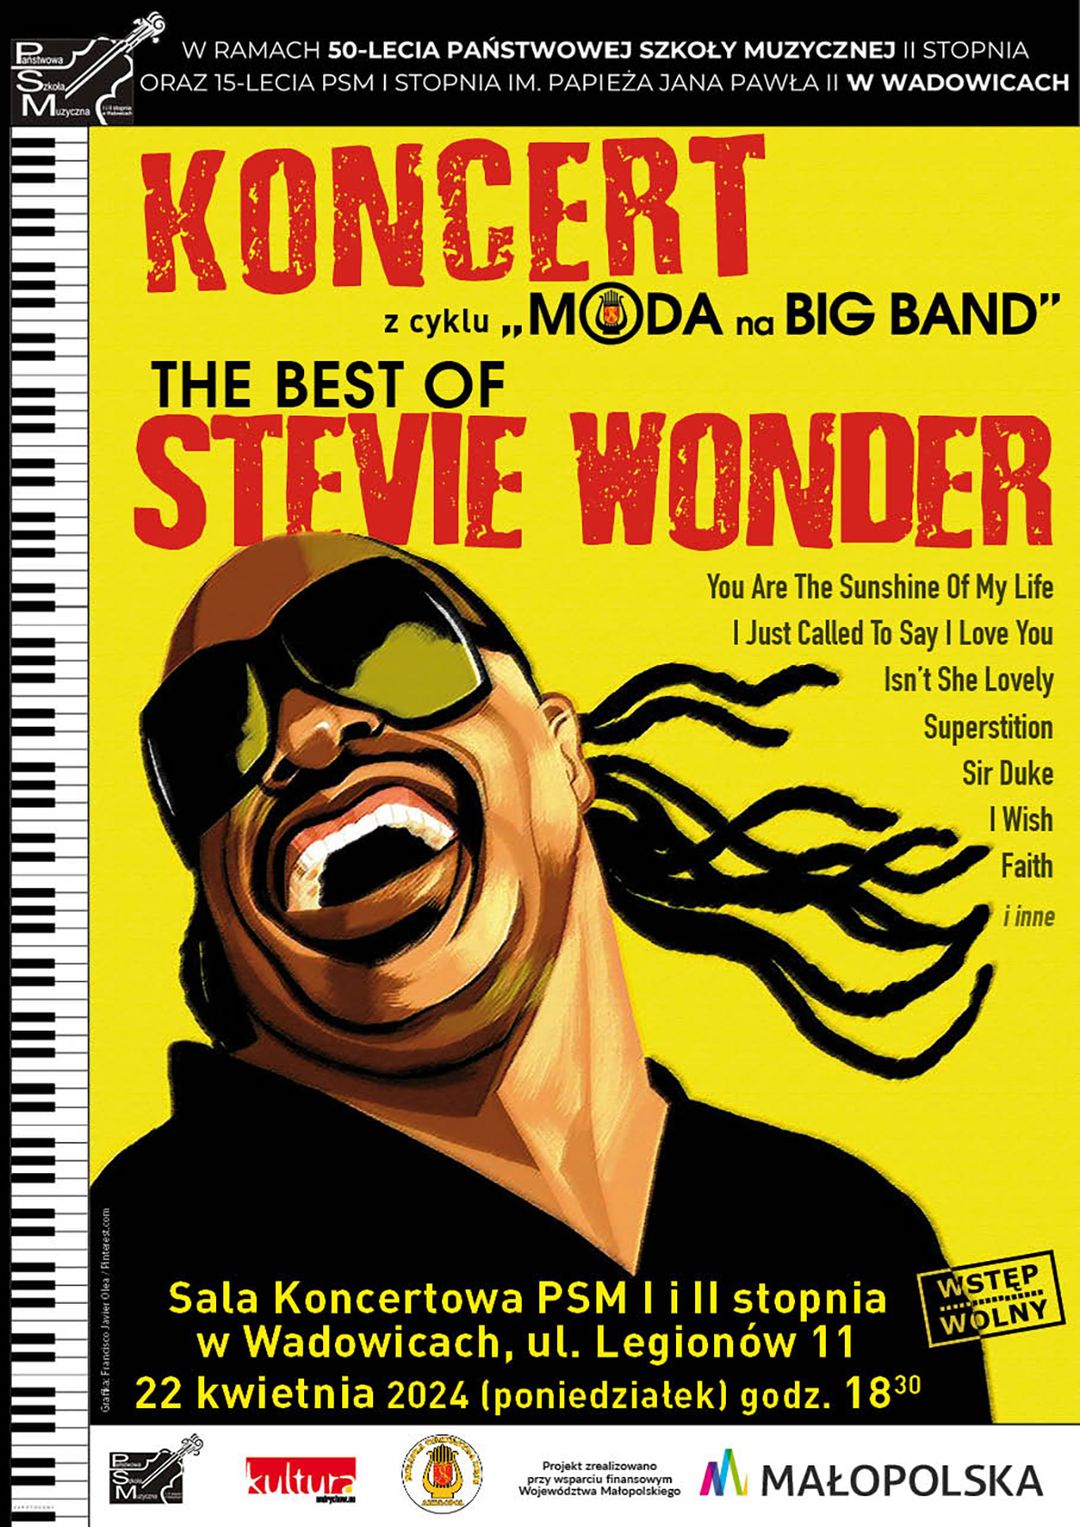 The Best Of Stevie Wonder